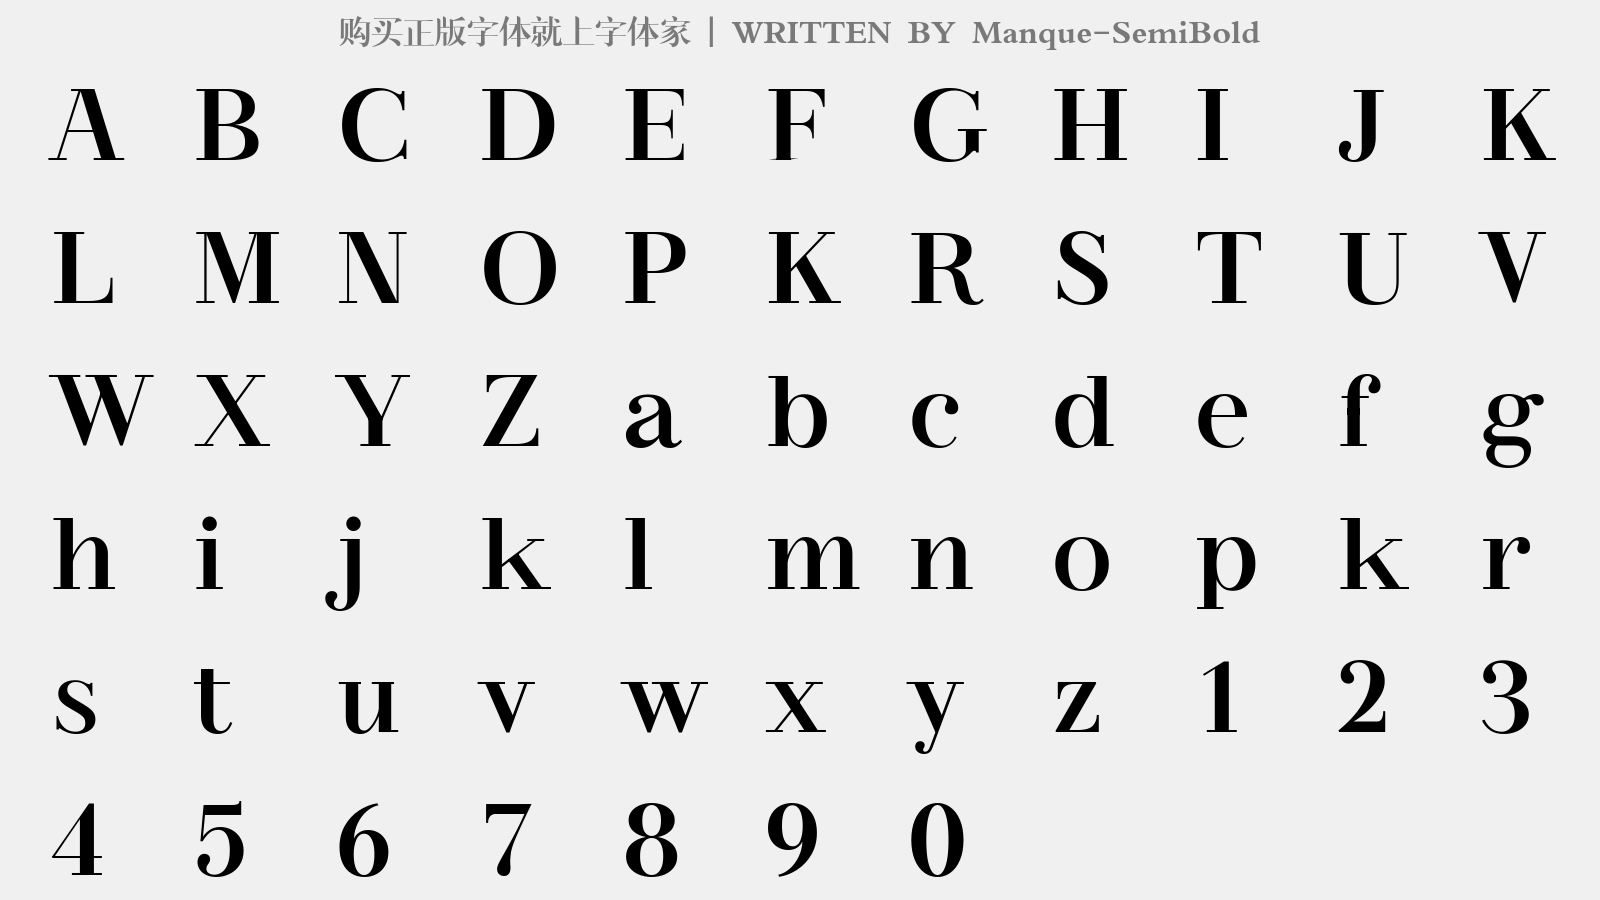 Manque-SemiBold - 大写字母/小写字母/数字